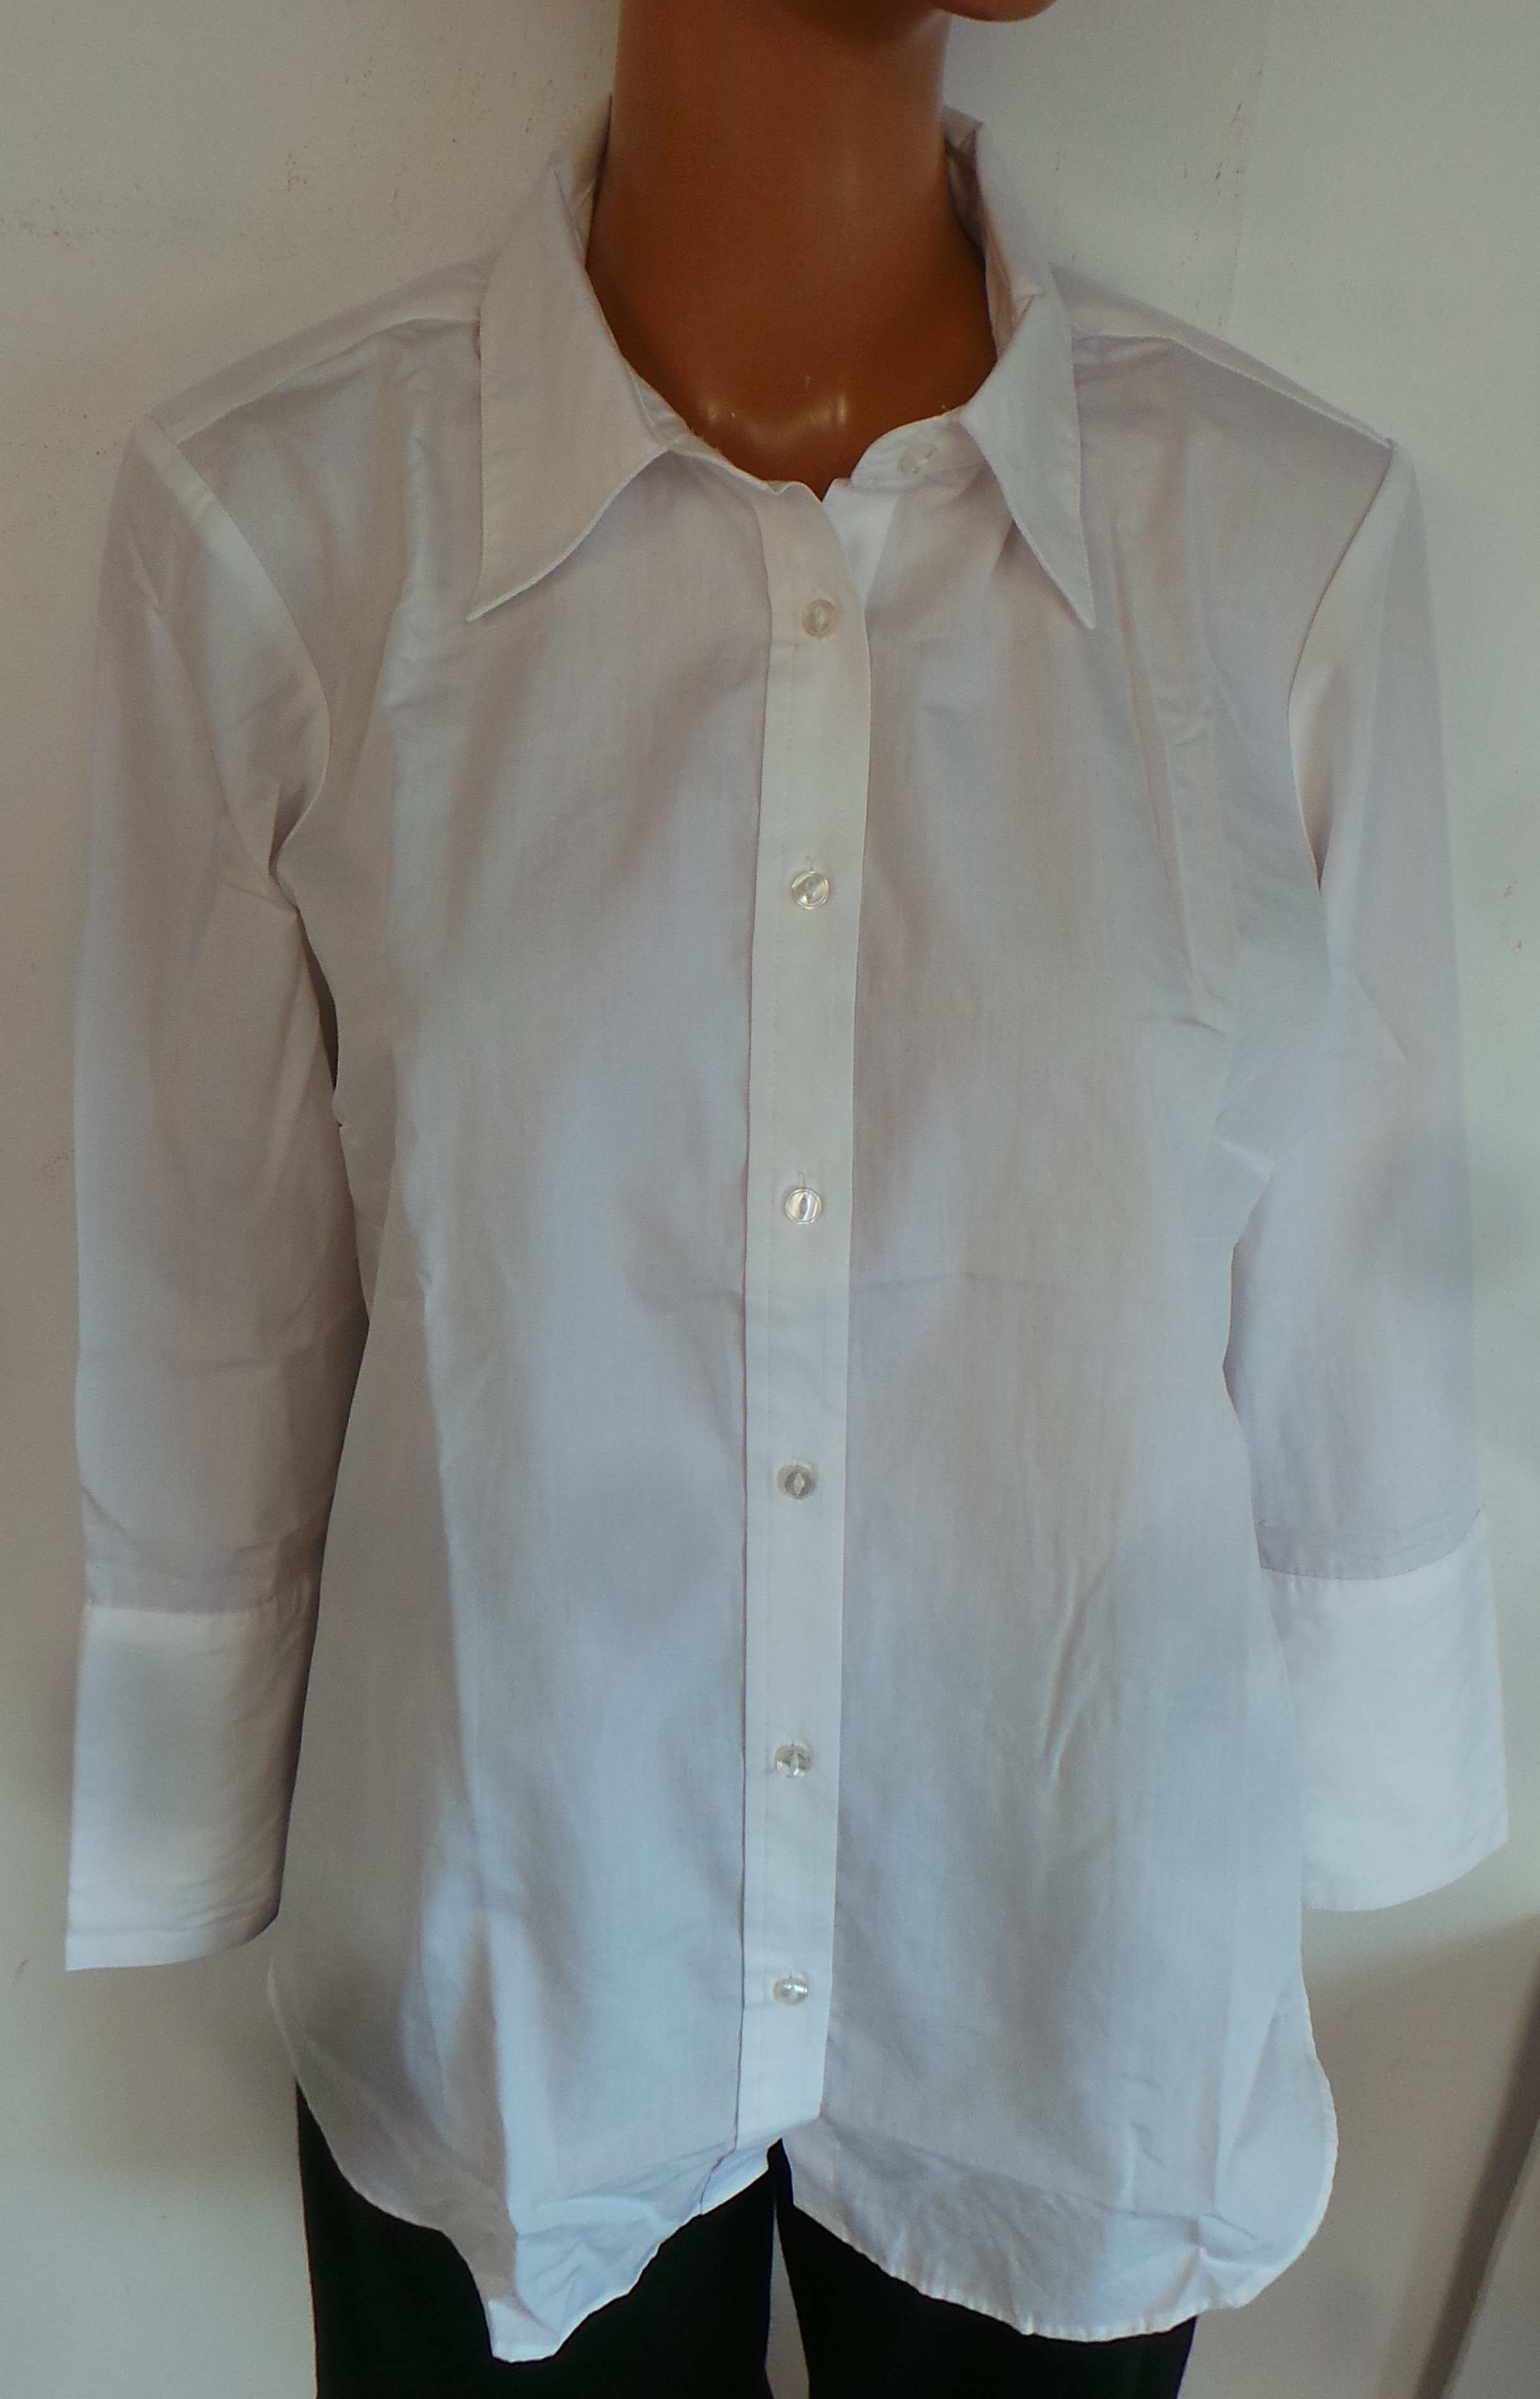 Wholesale Joblot of 20 Westworld Ladies White Smart Shirts Sizes S-XL